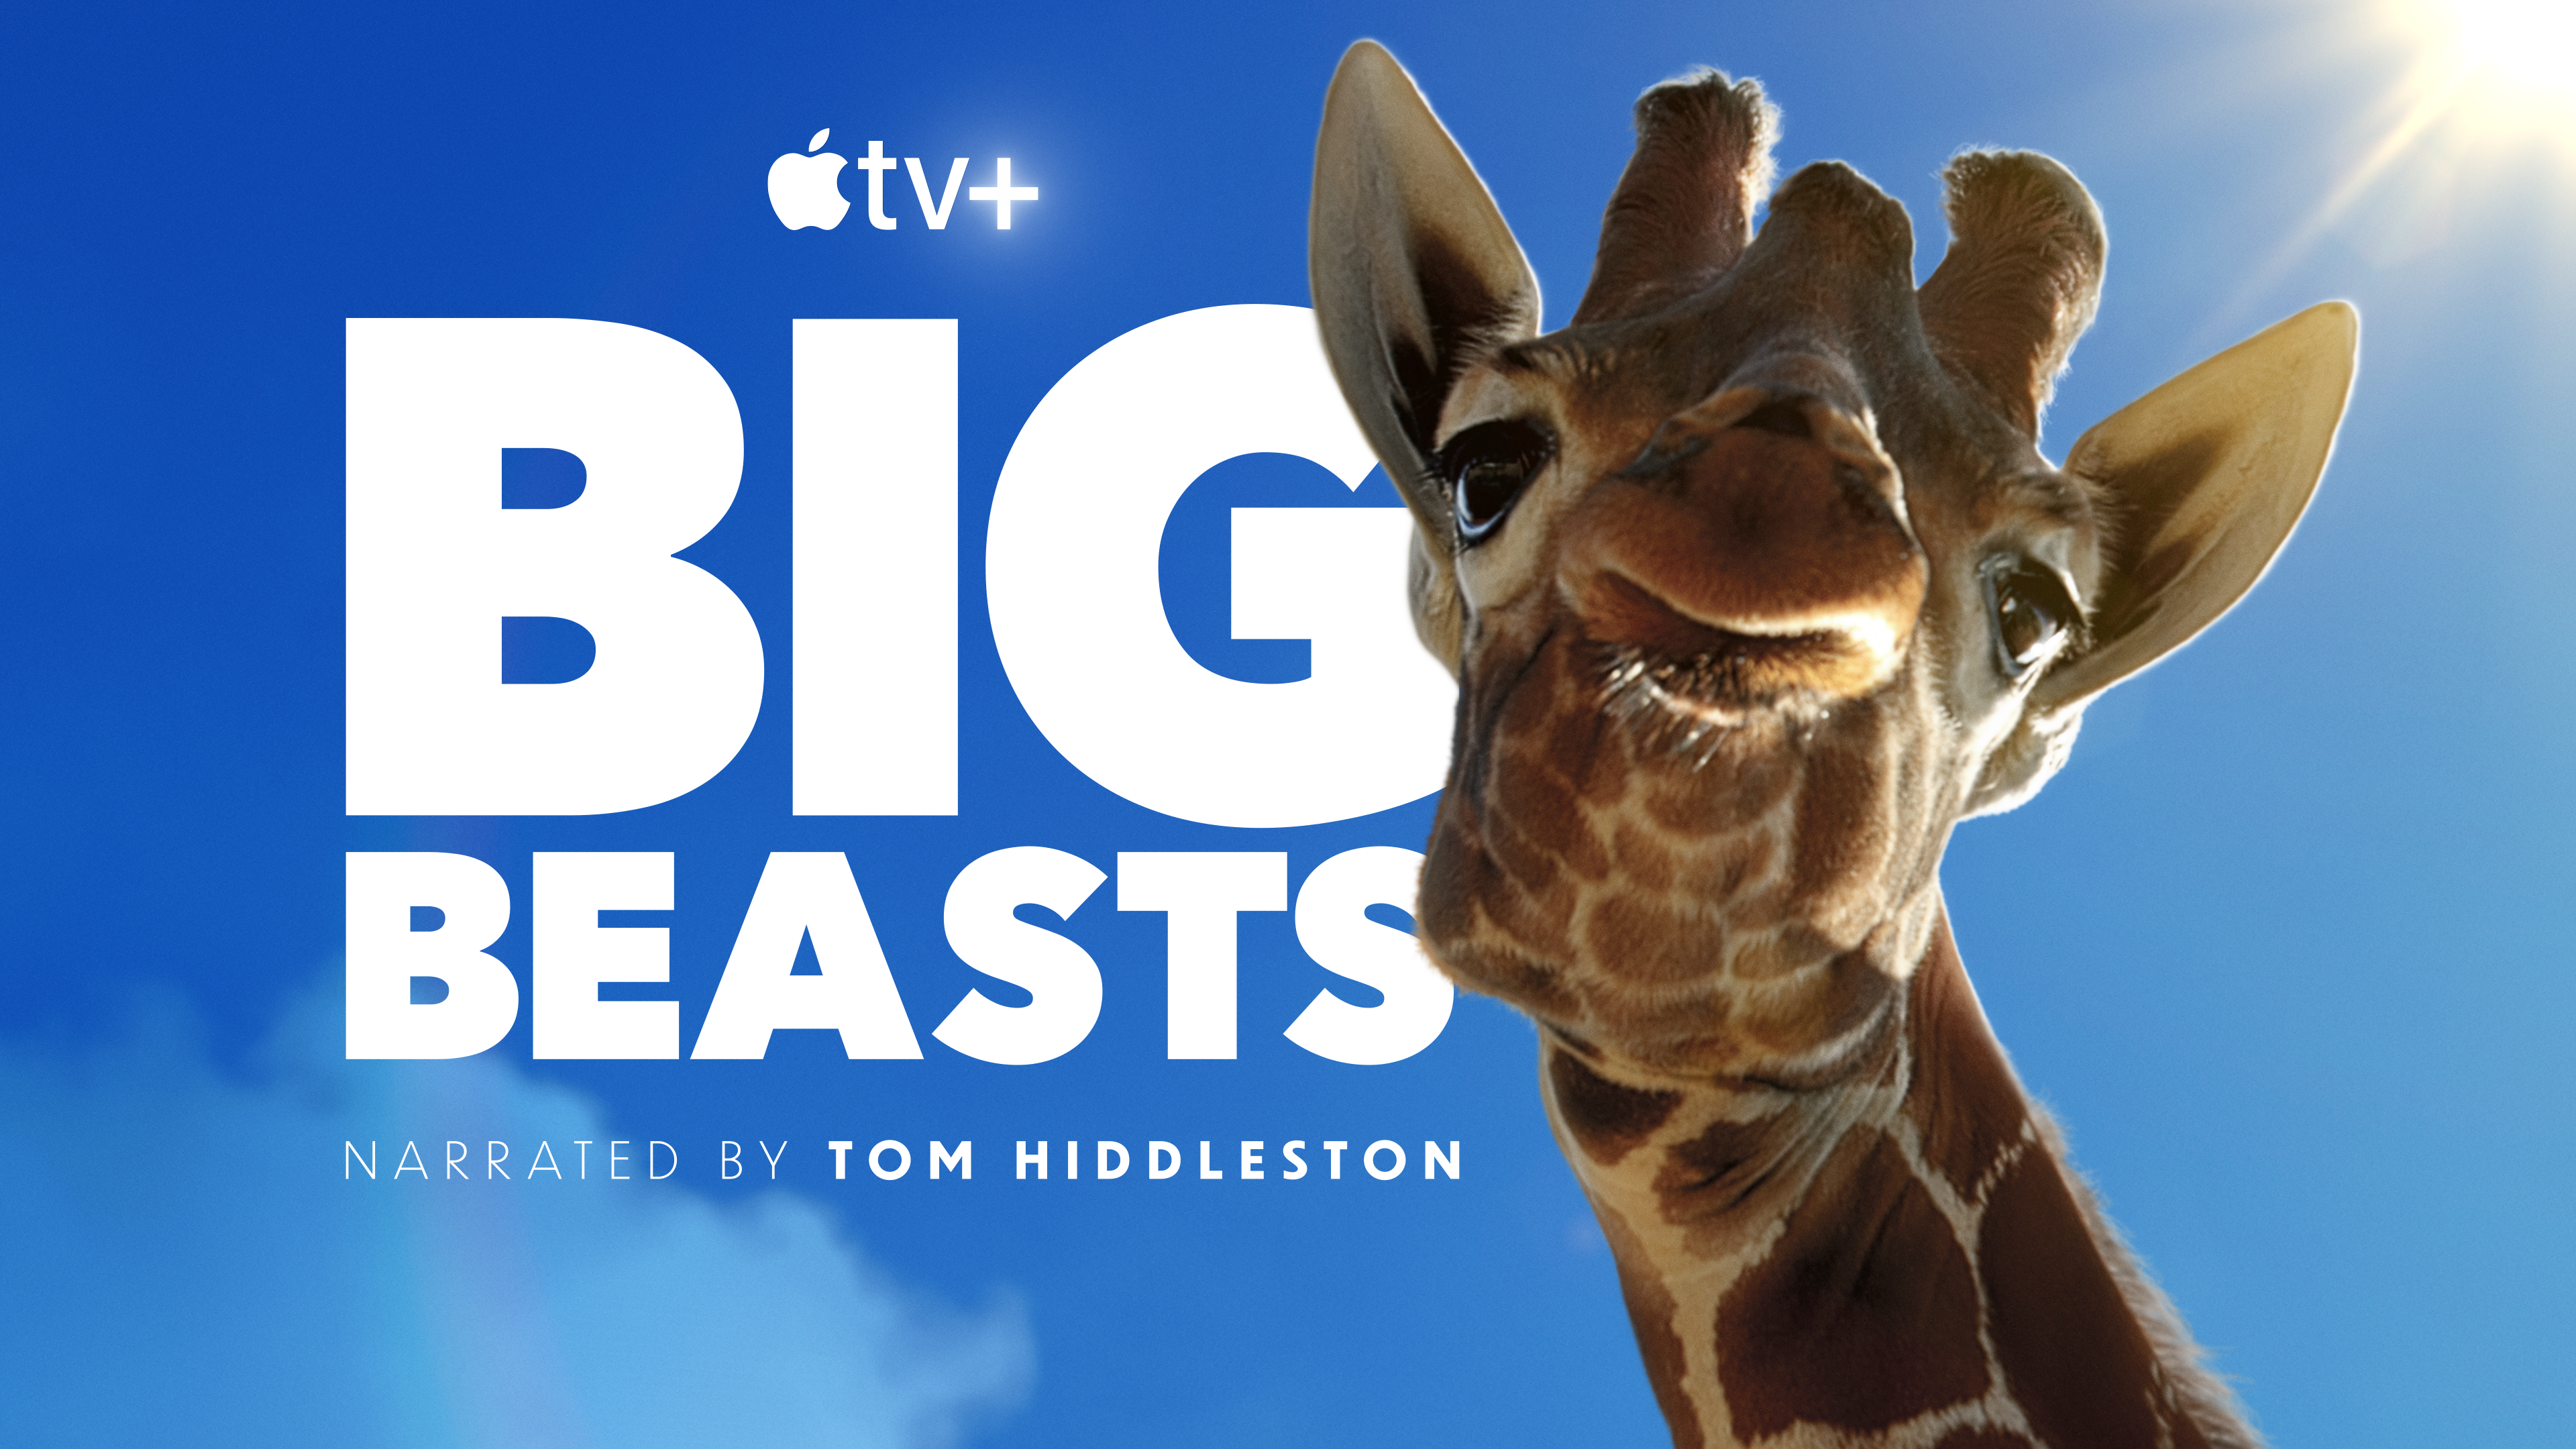 big beasts - una giraffa in primo piano